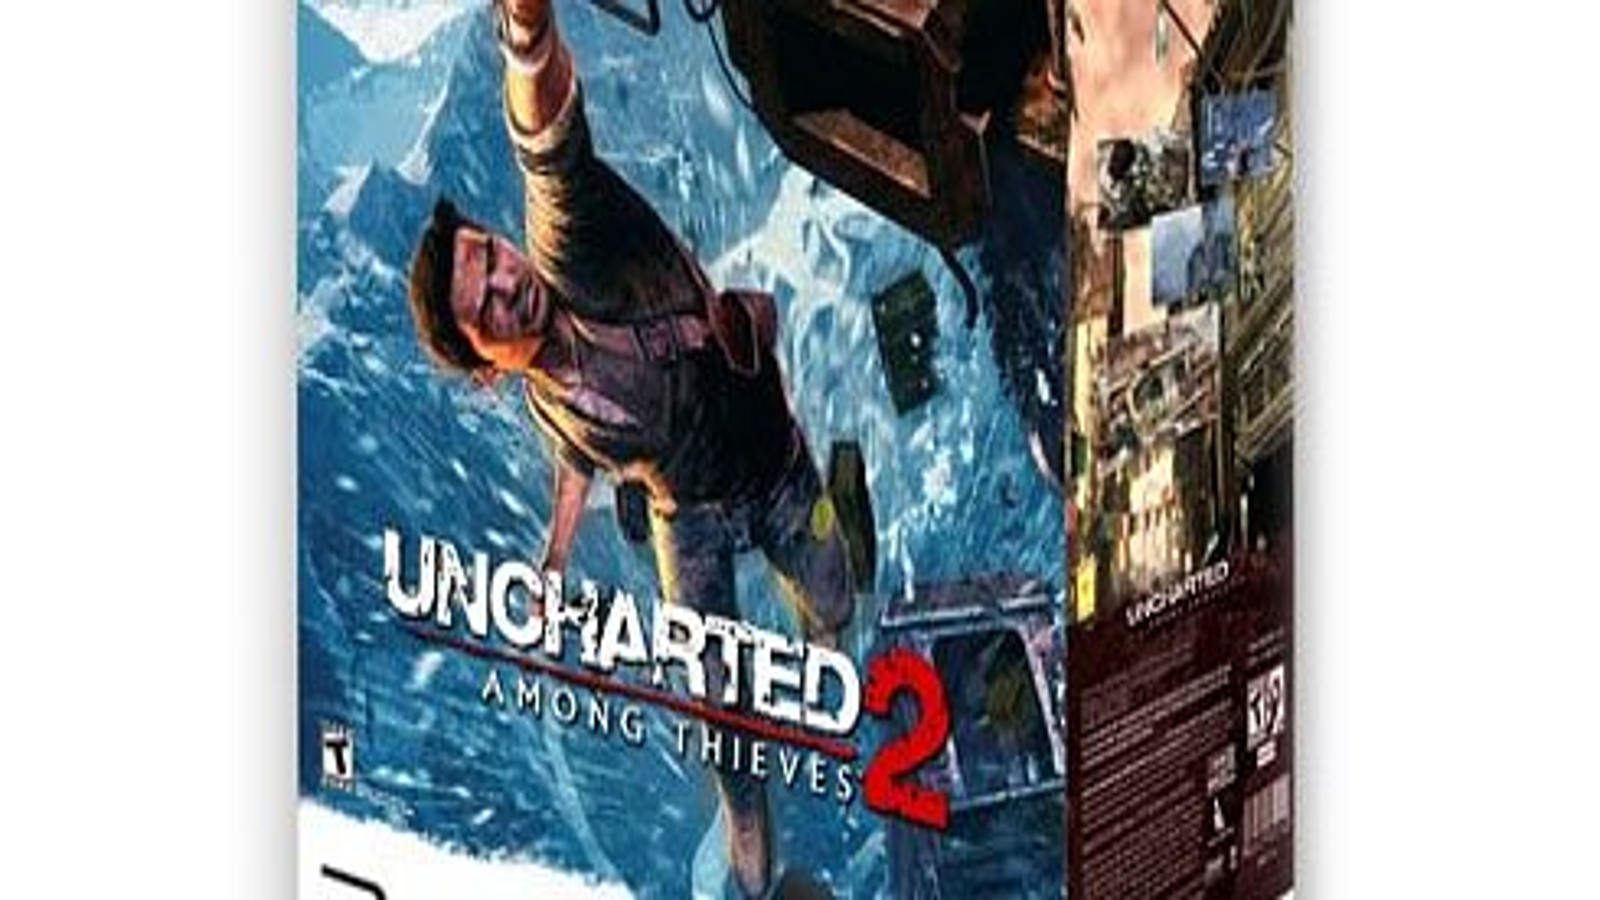 250GB PlayStation 3 slim Uncharted 2 bundle leaked?